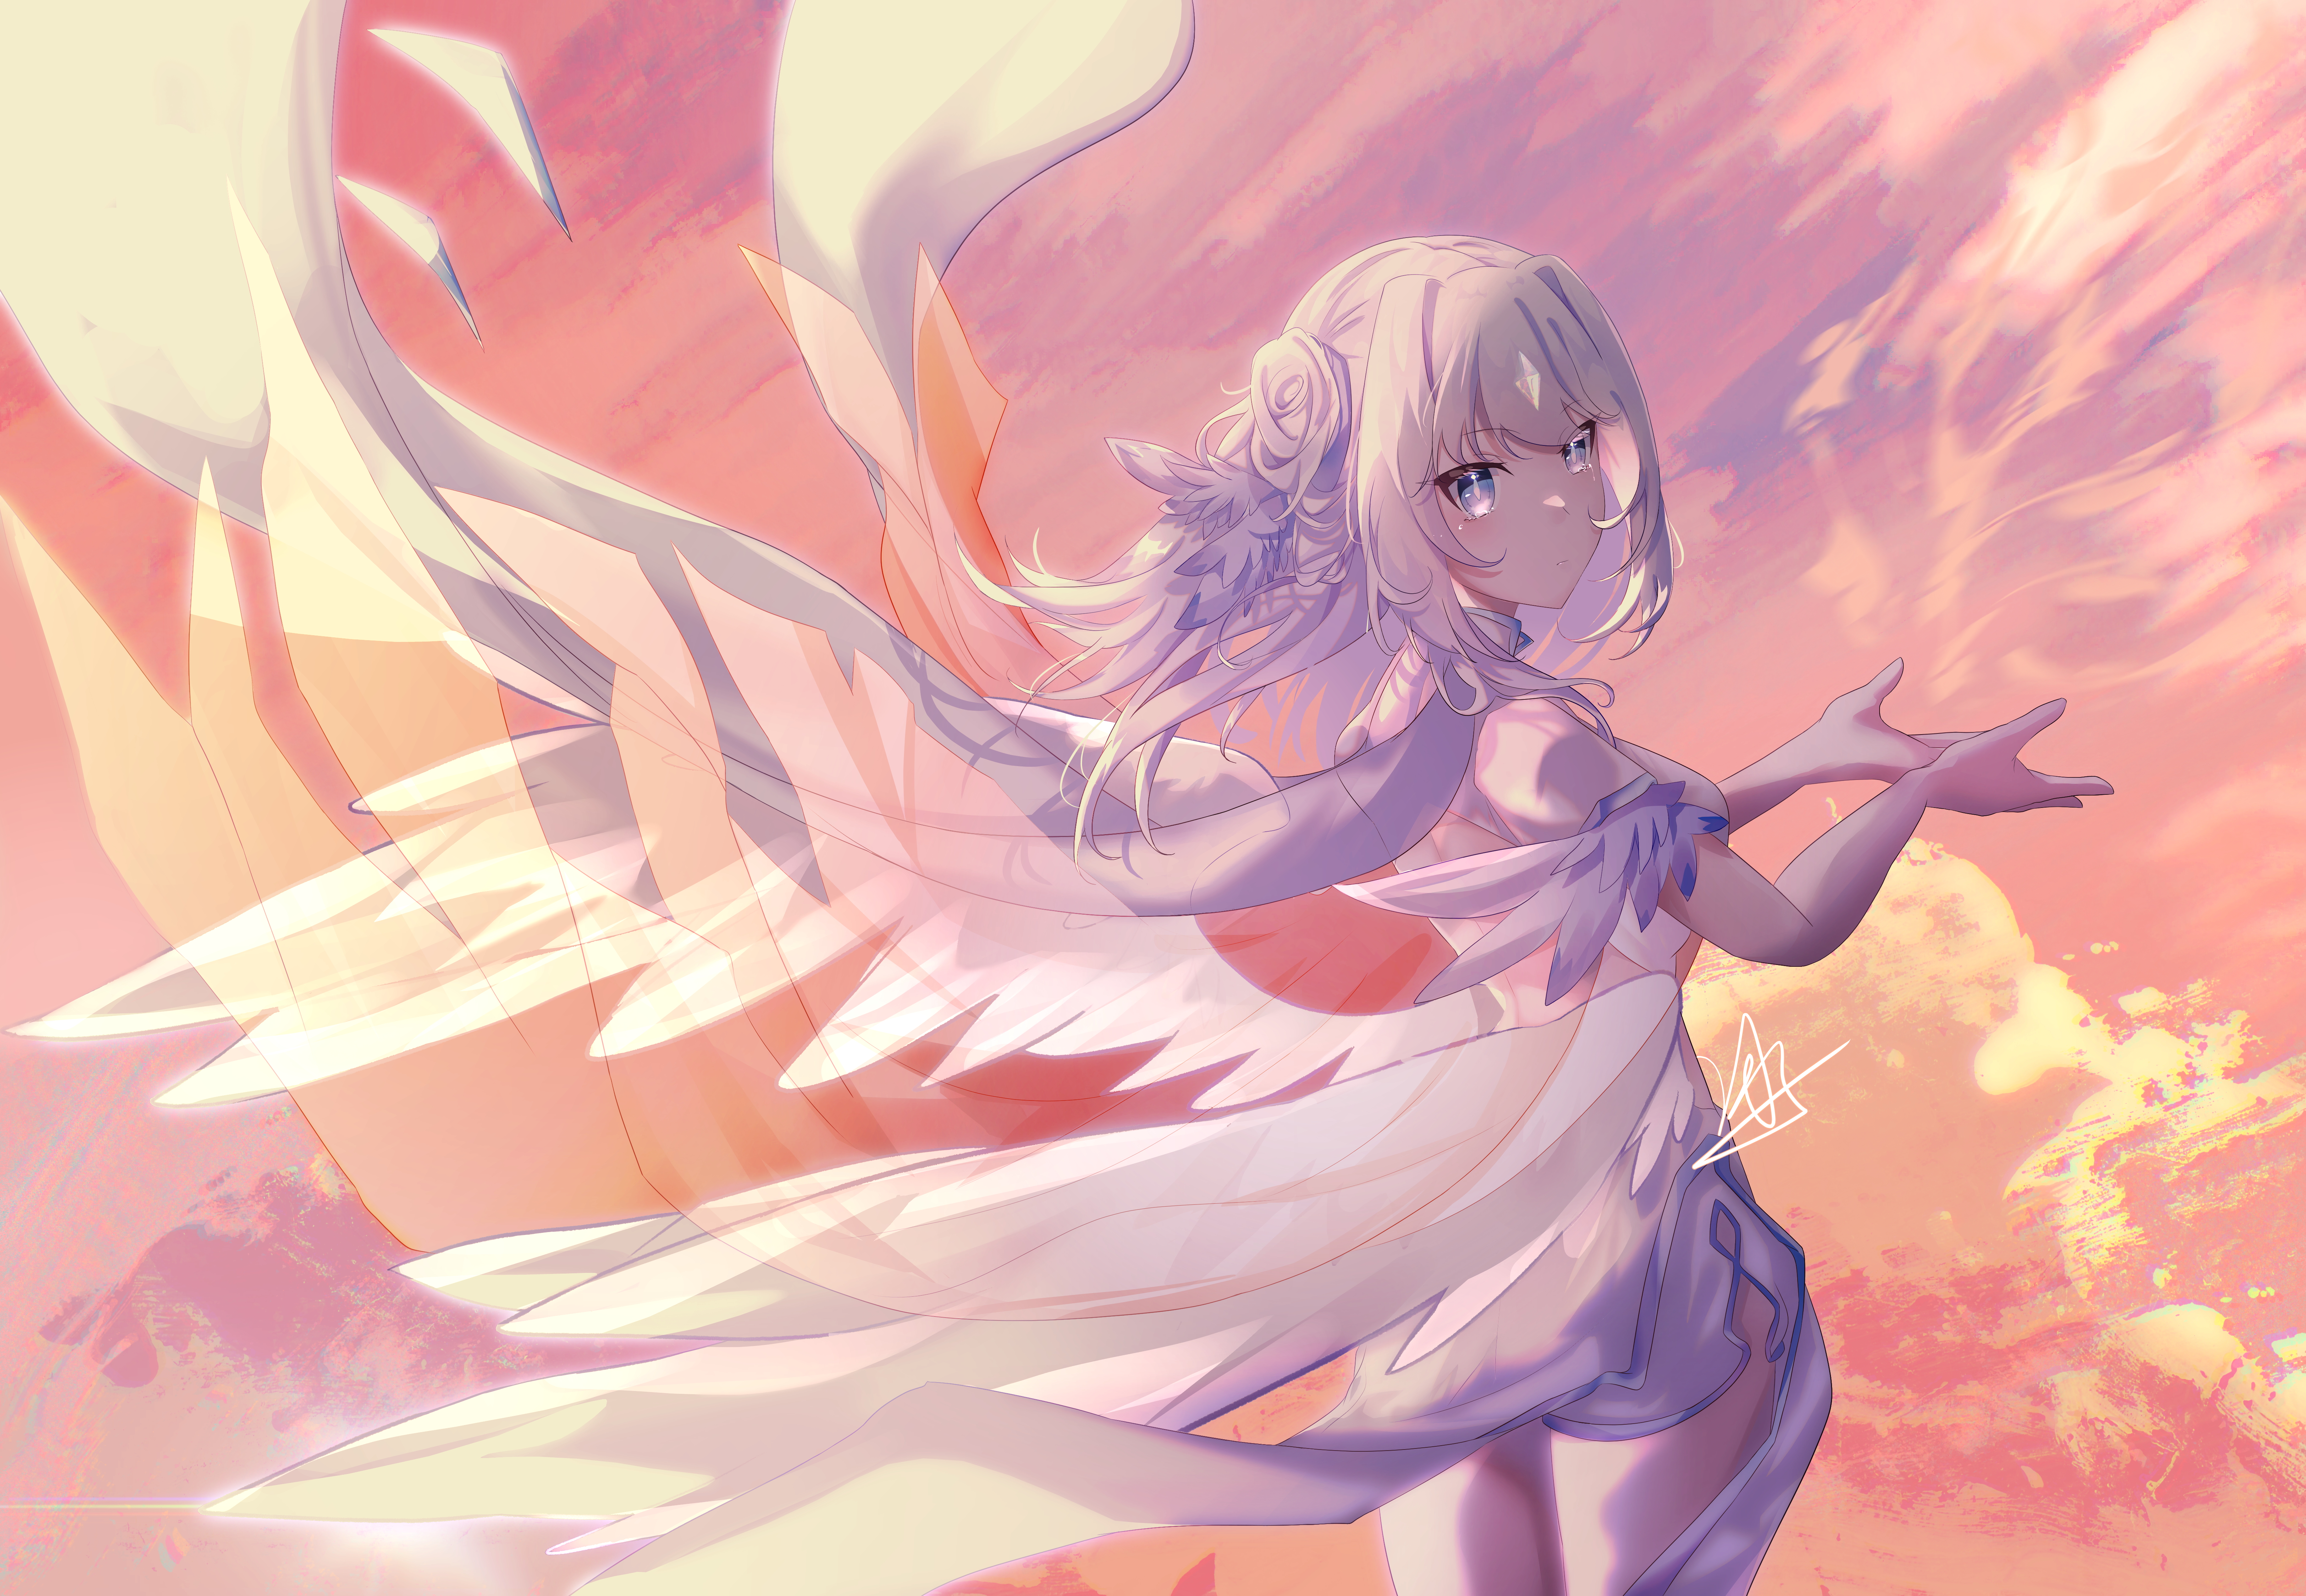 Shy girl angel.Anime art stock photo. Image of wings - 274420554